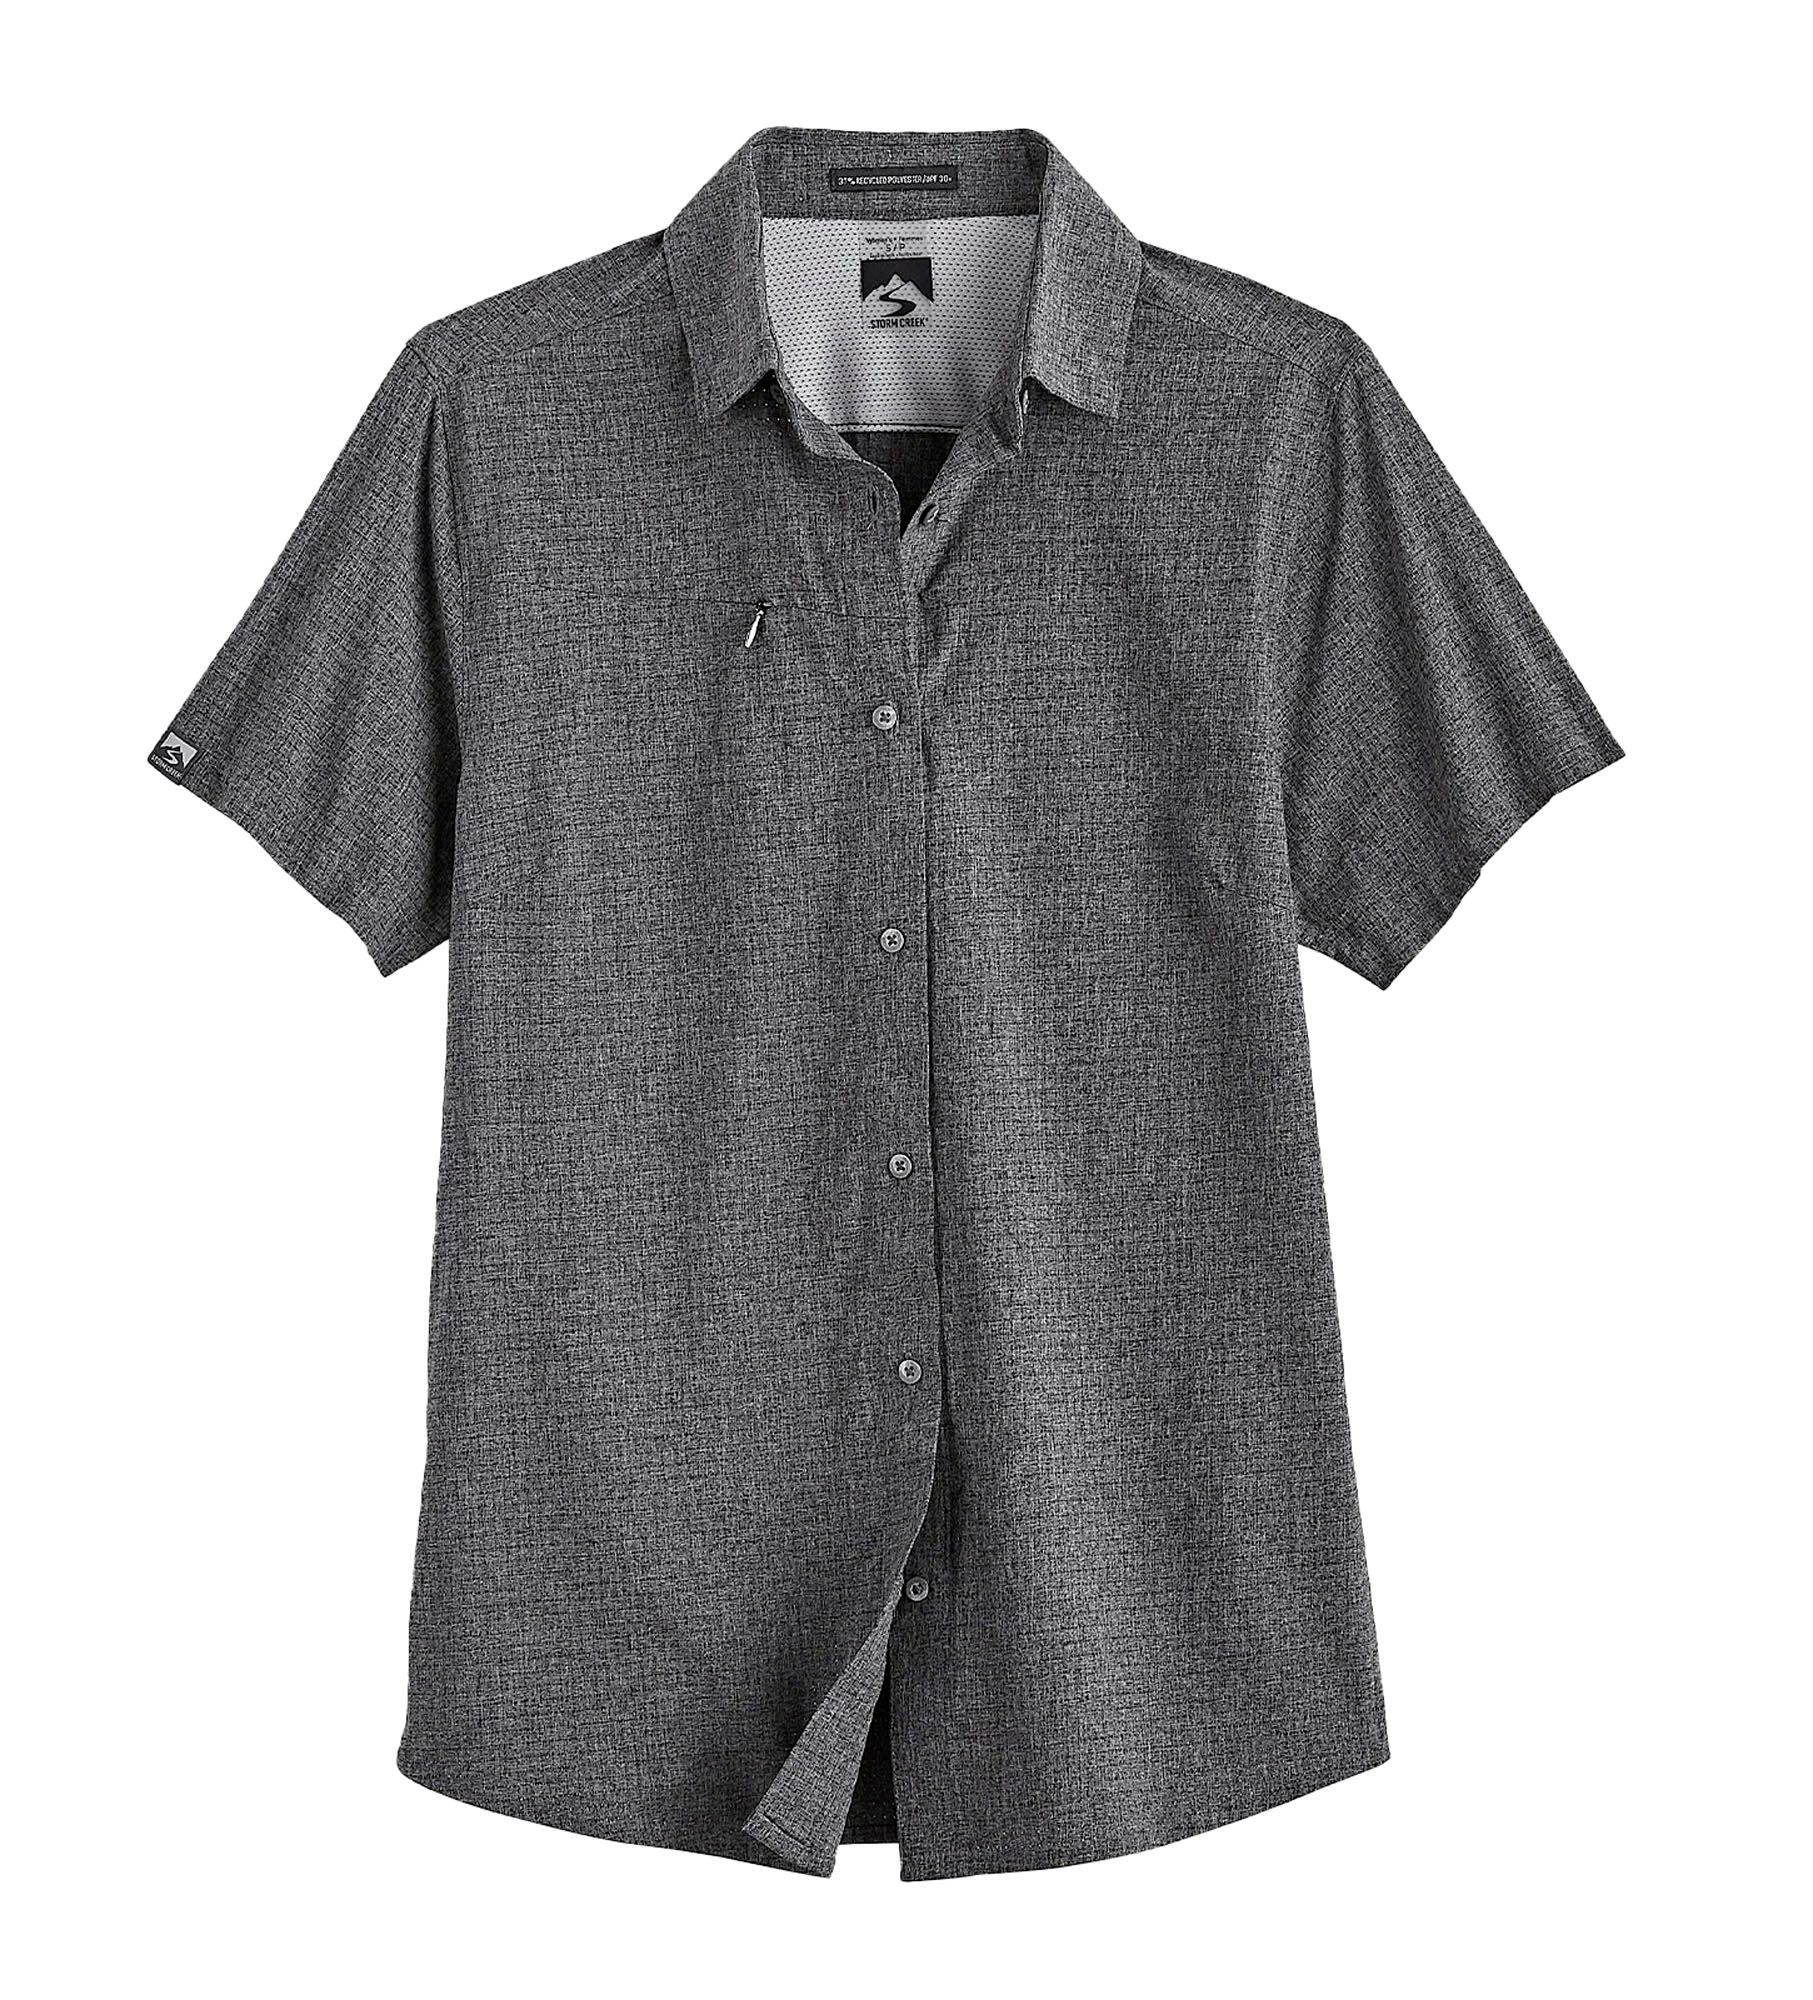 Storm Creek Naturalist Short-Sleeve Shirt for Ladies - Gray - XL